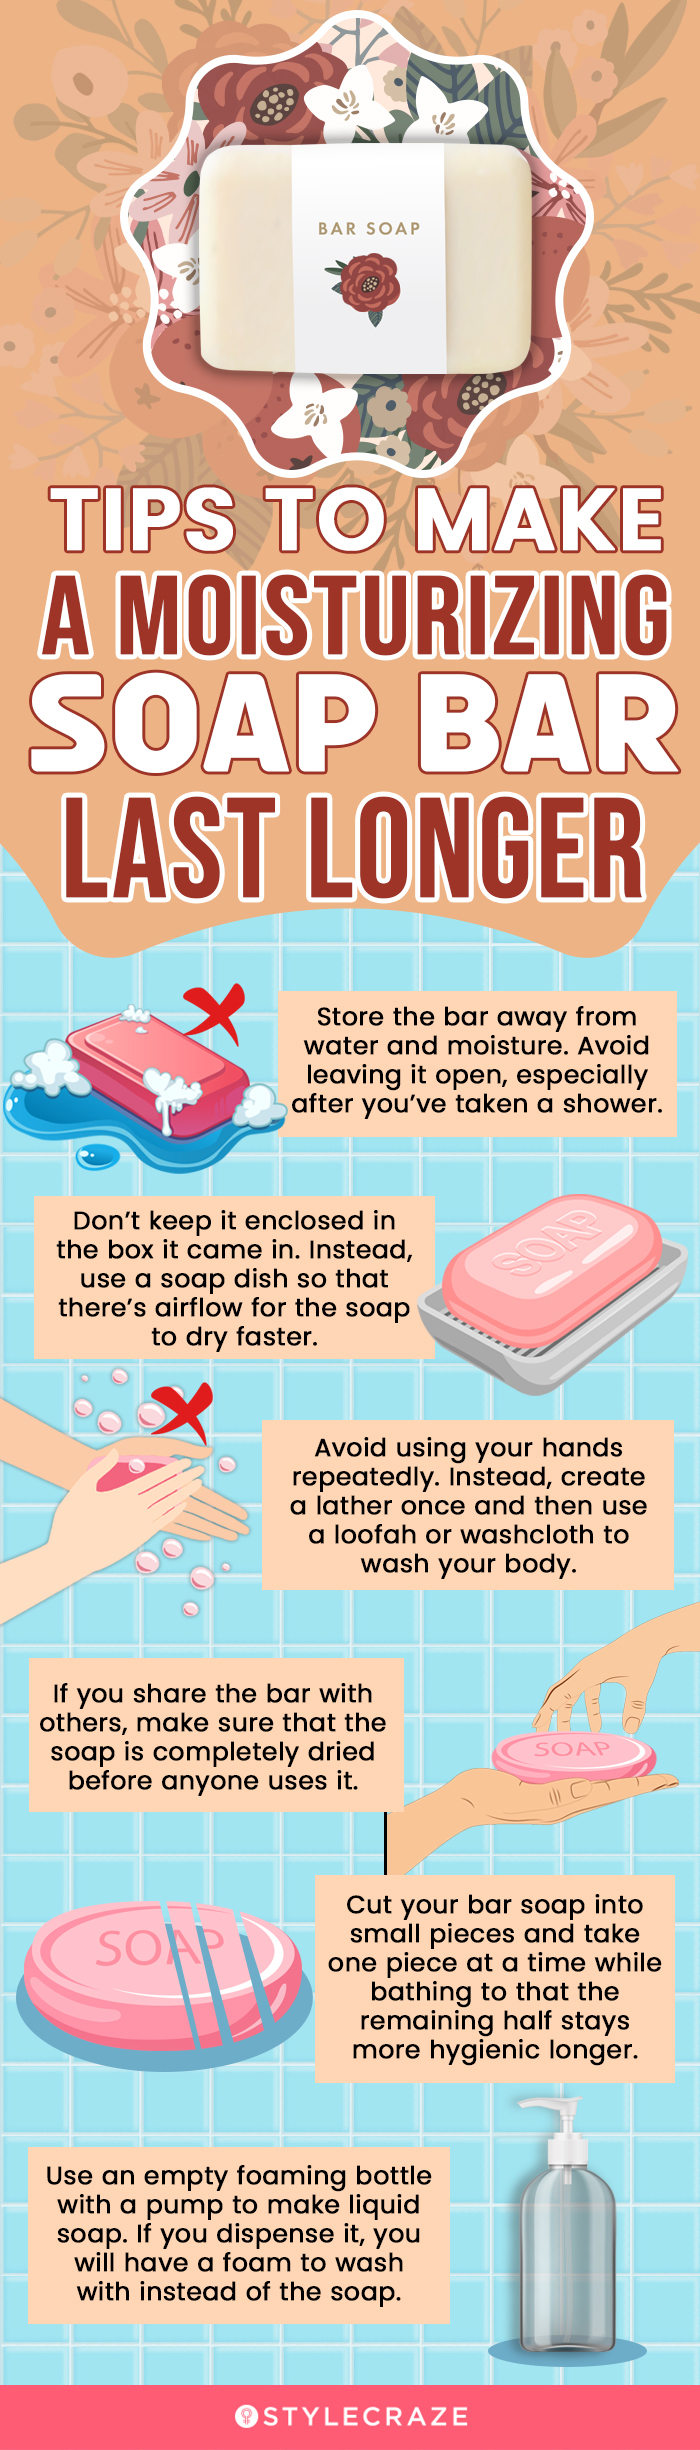 Tips To Make The Moisturizing Soap Bar Last Longer (infographic)